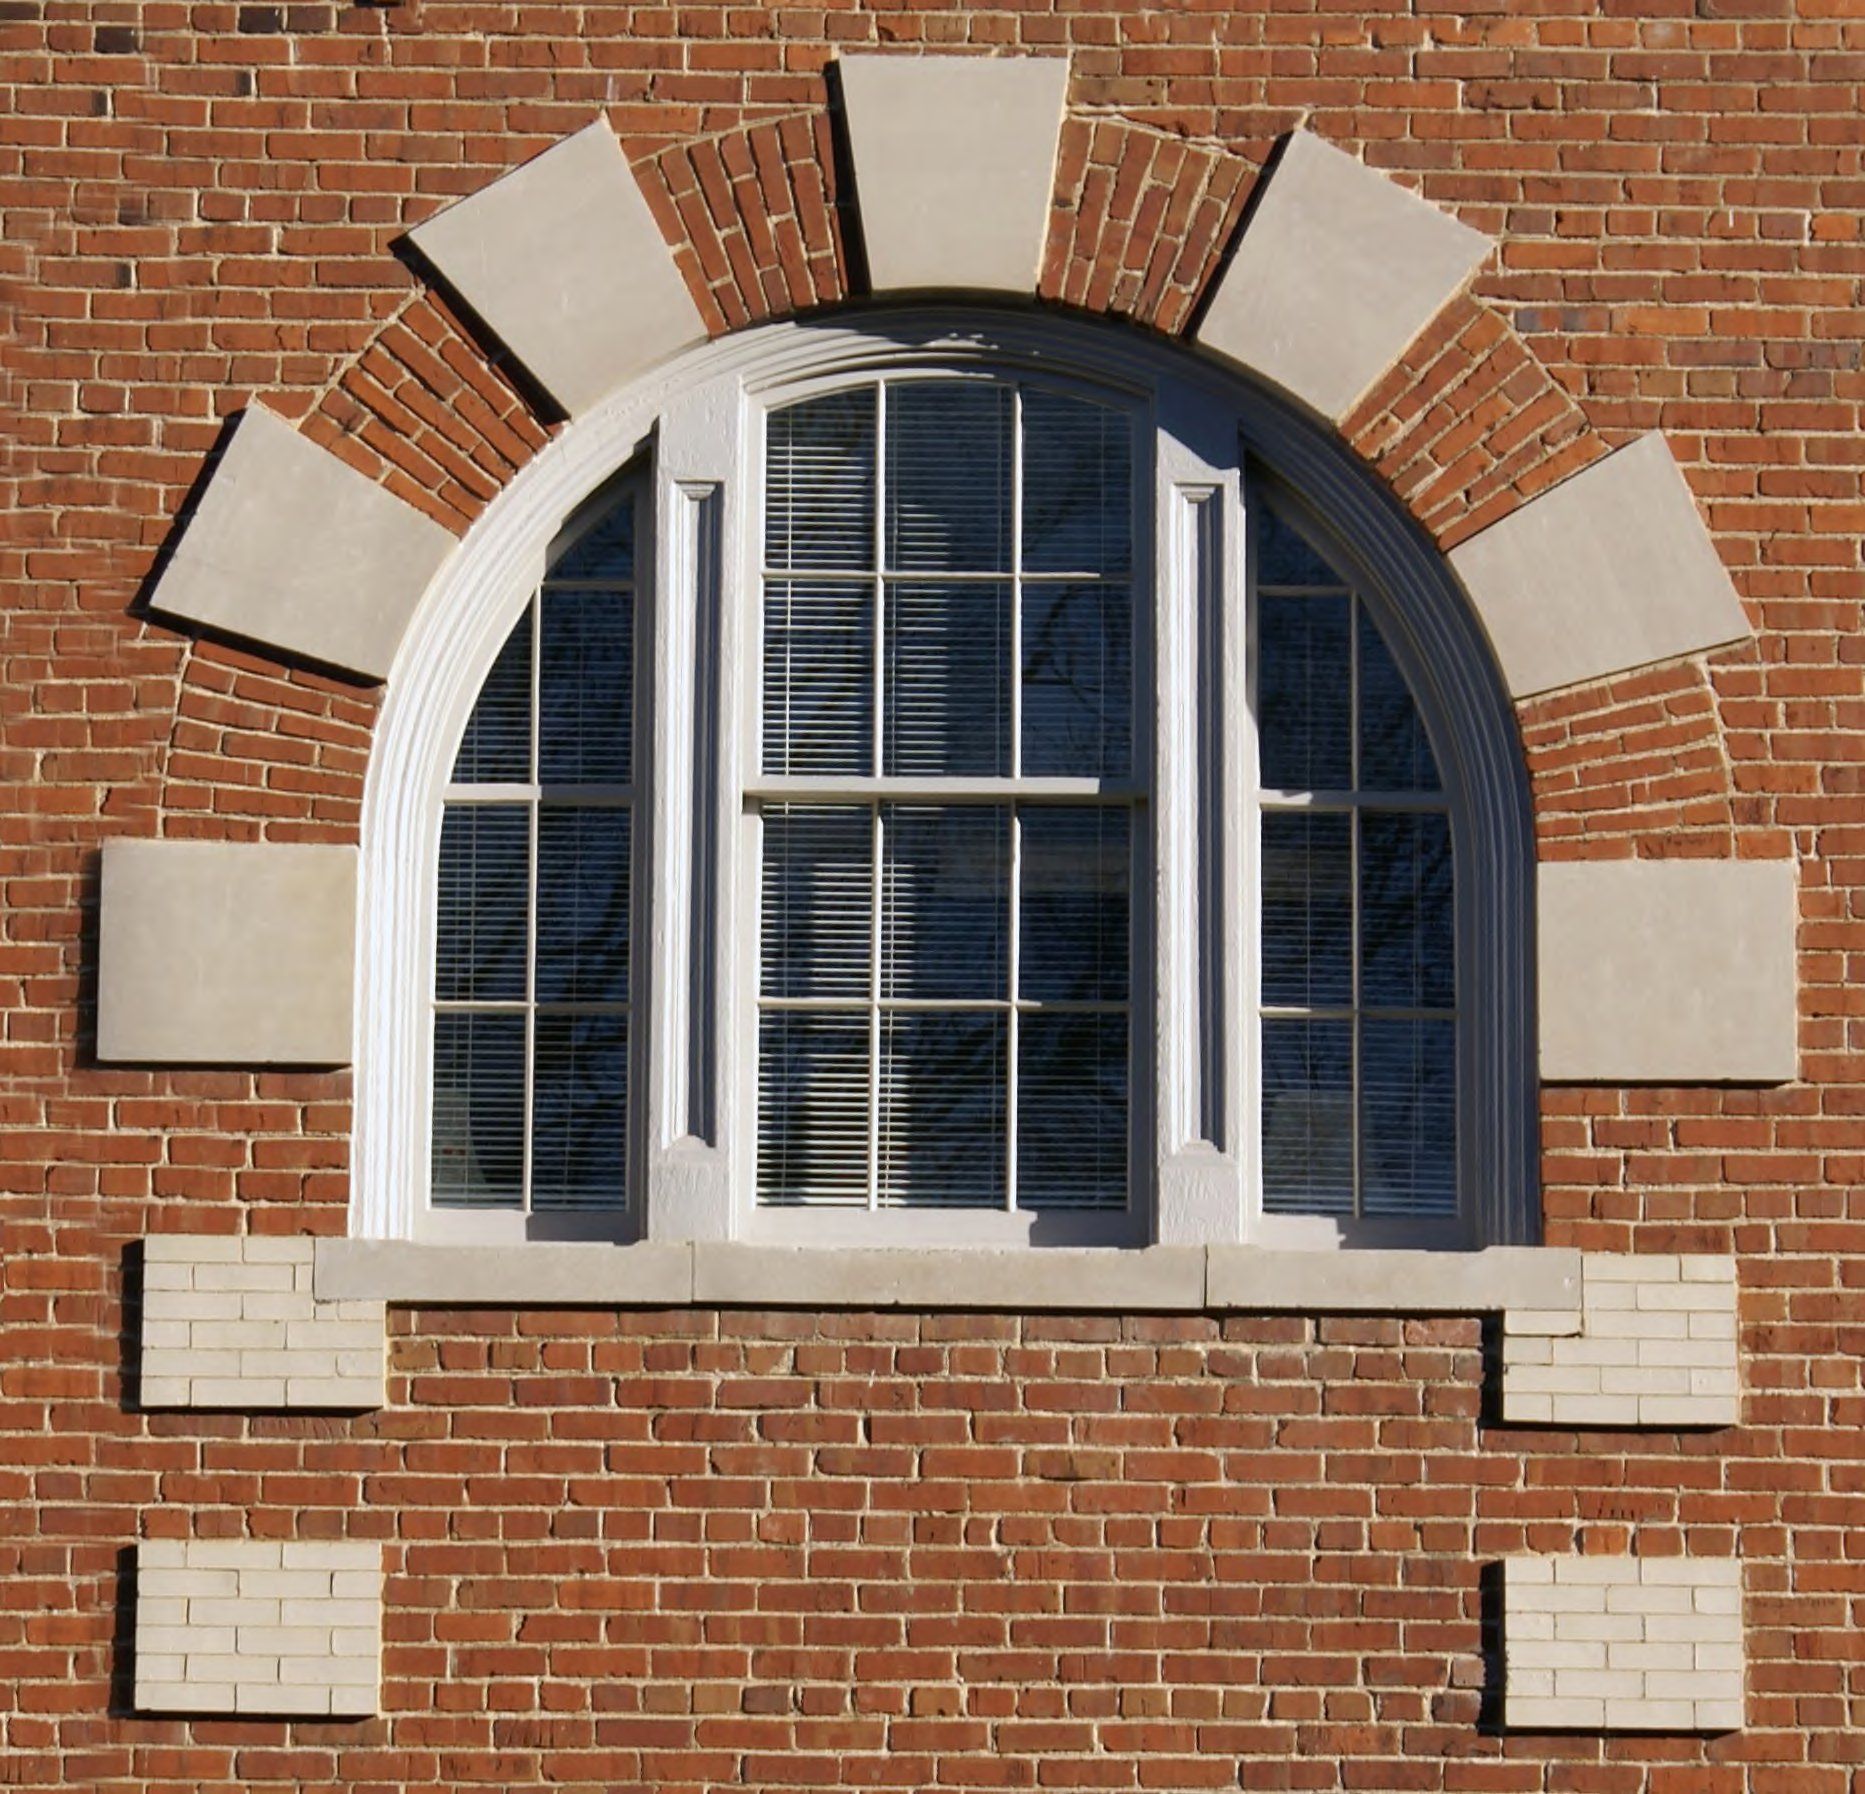 brick around windows - Пошук Google | Різне | Pinterest | Window ...